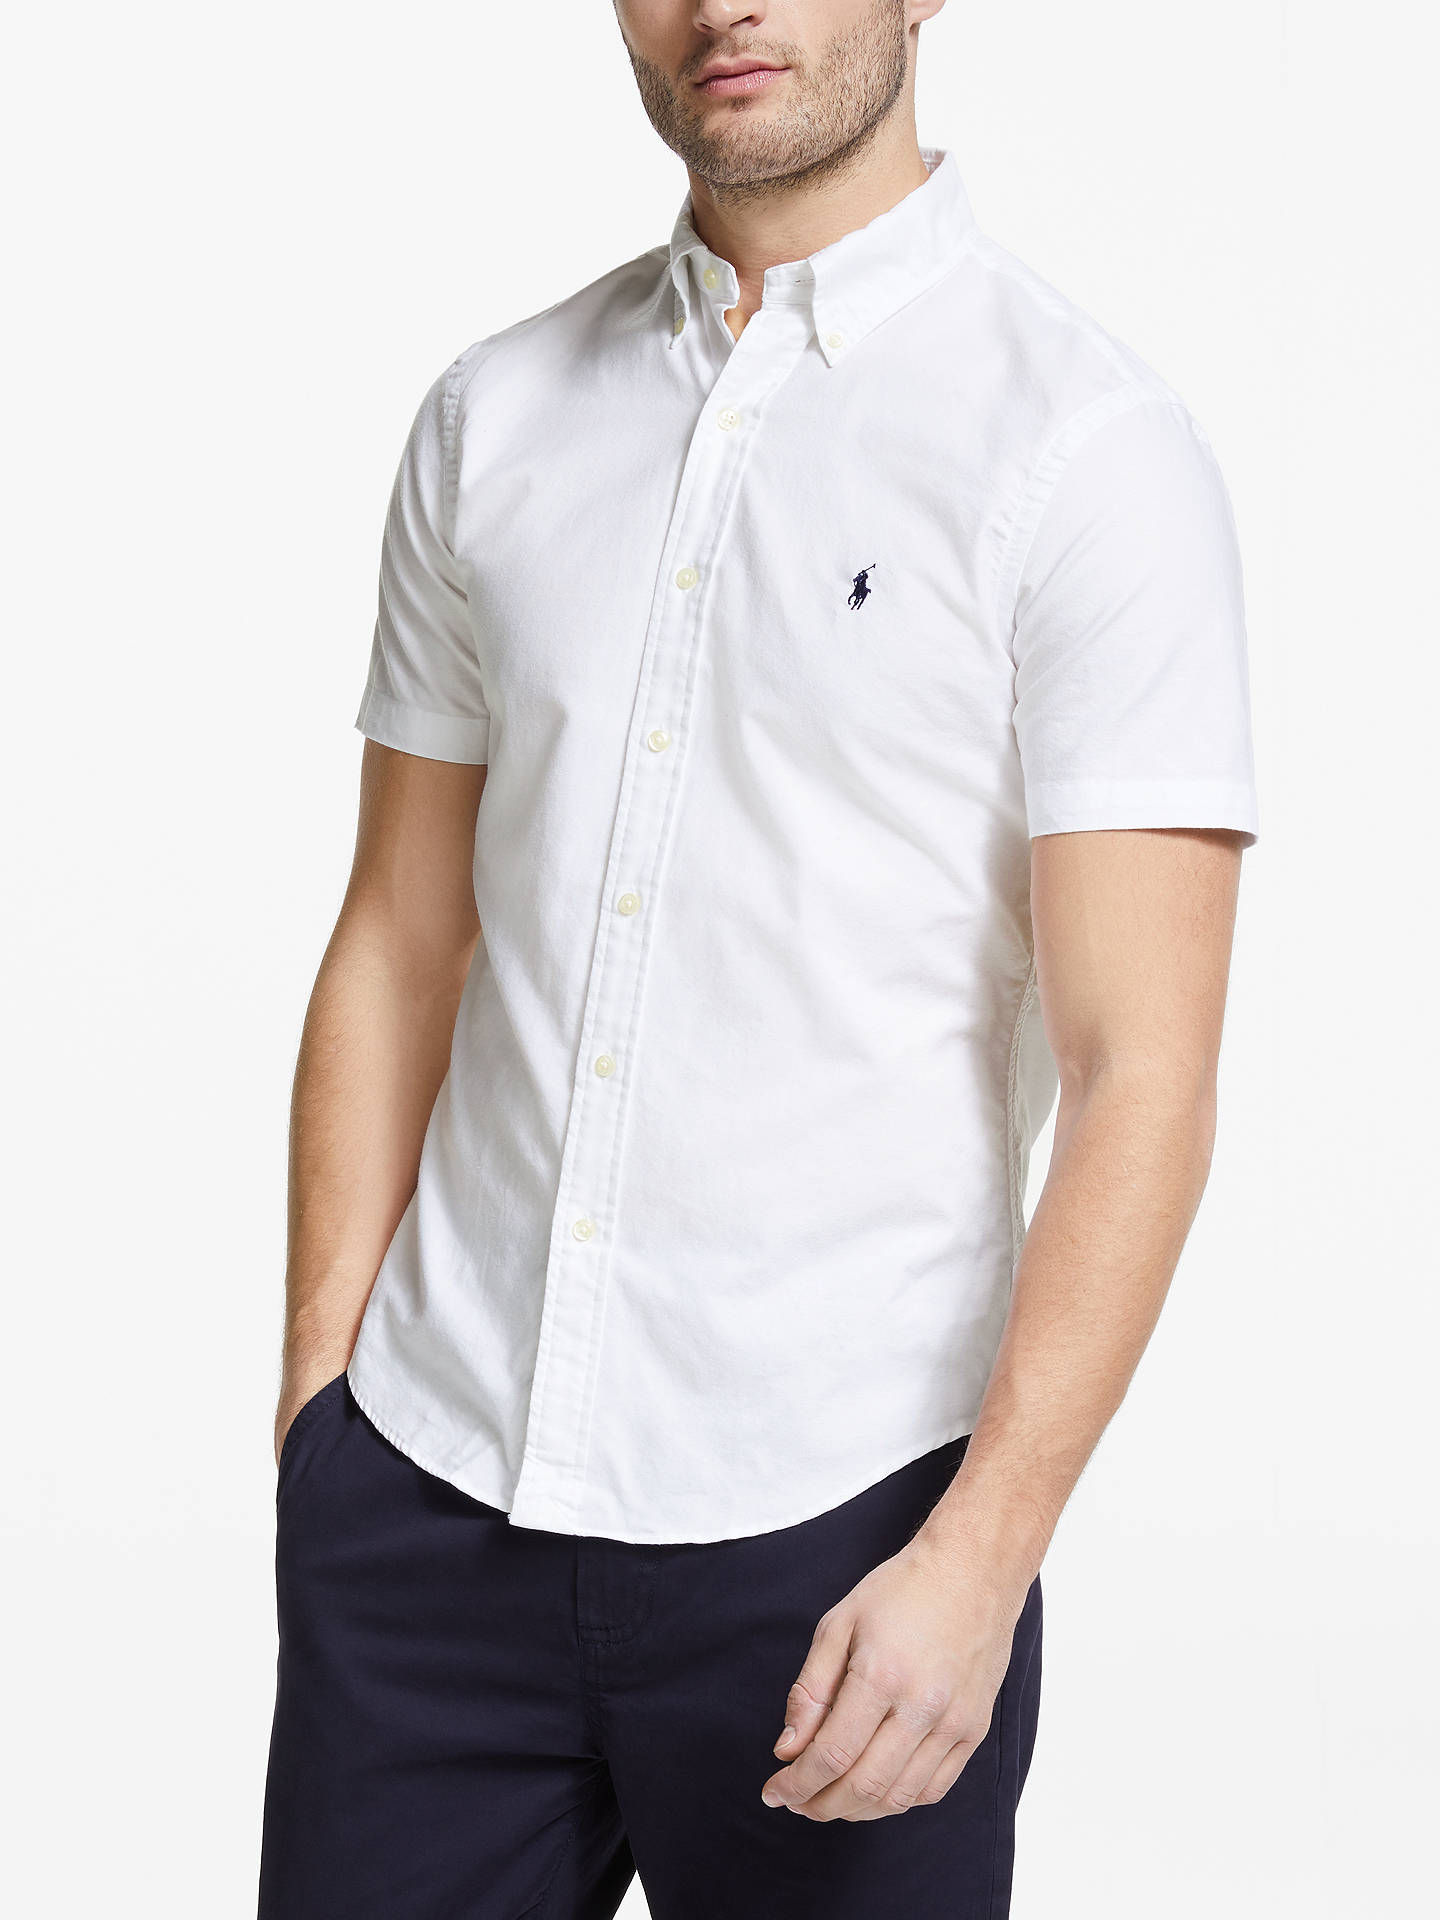 Polo Ralph Lauren Short Sleeve Shirt, White at John Lewis & Partners